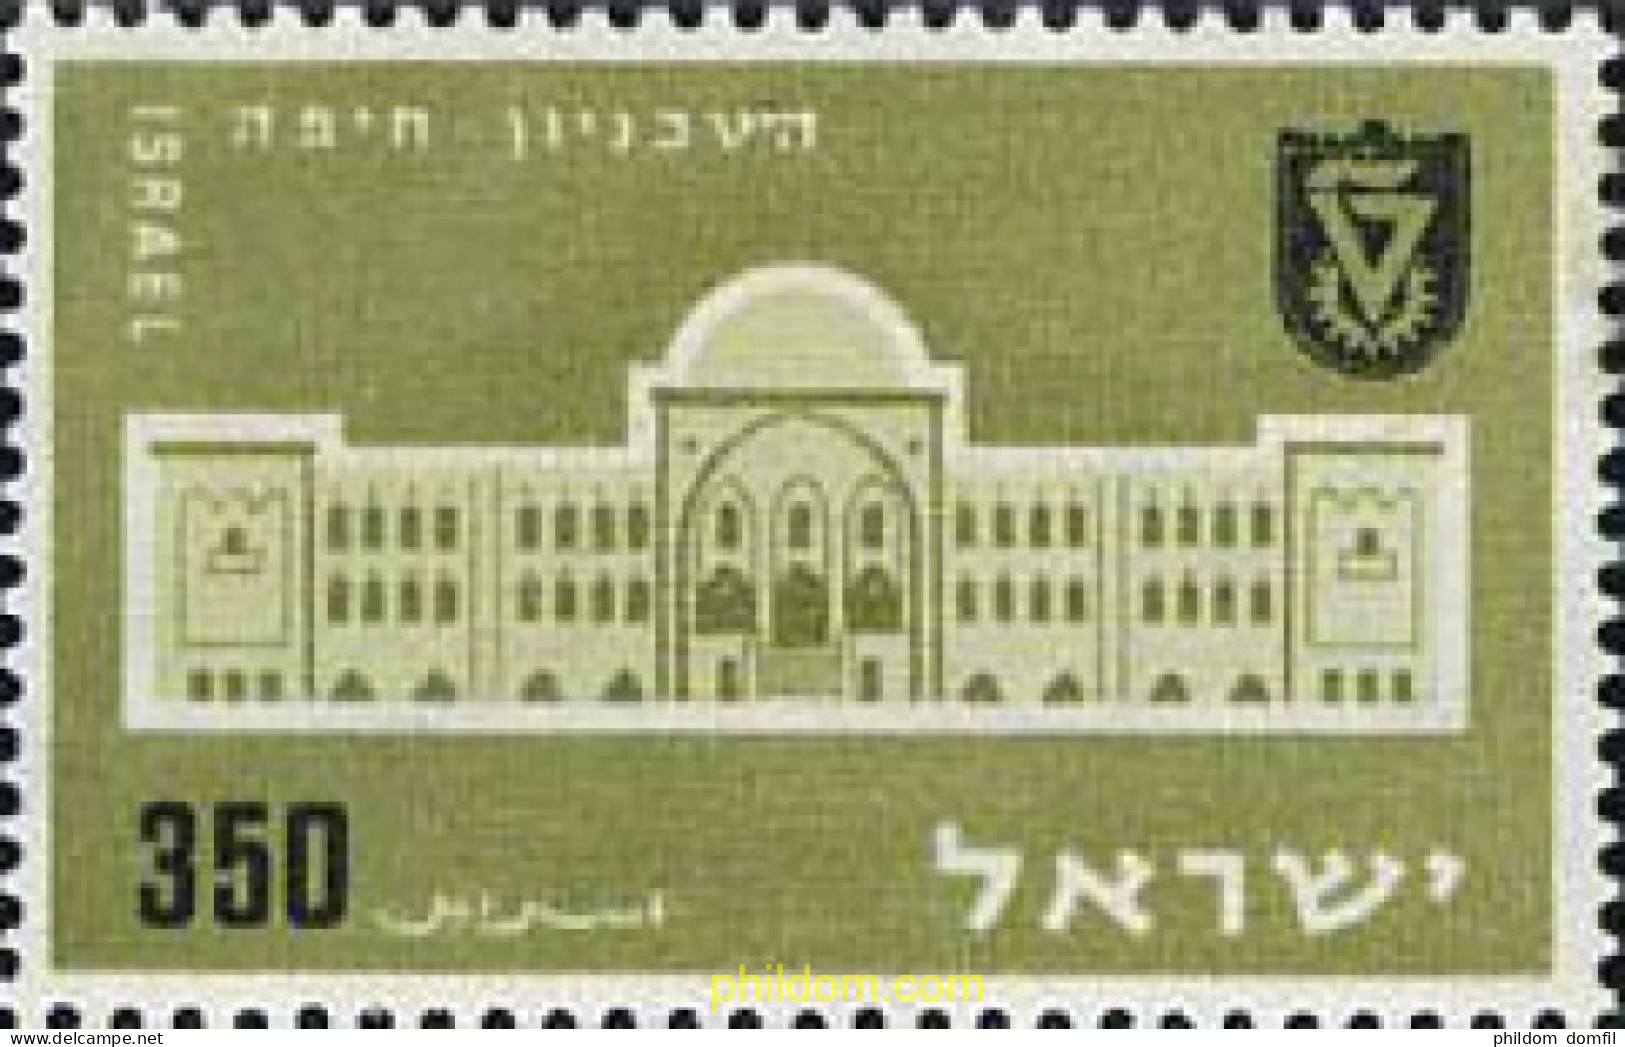 128648 MNH ISRAEL 1956 30 ANIVERSARIO DEL INSTITUTO TECNOLOGICO DE HAIFA - Ungebraucht (ohne Tabs)